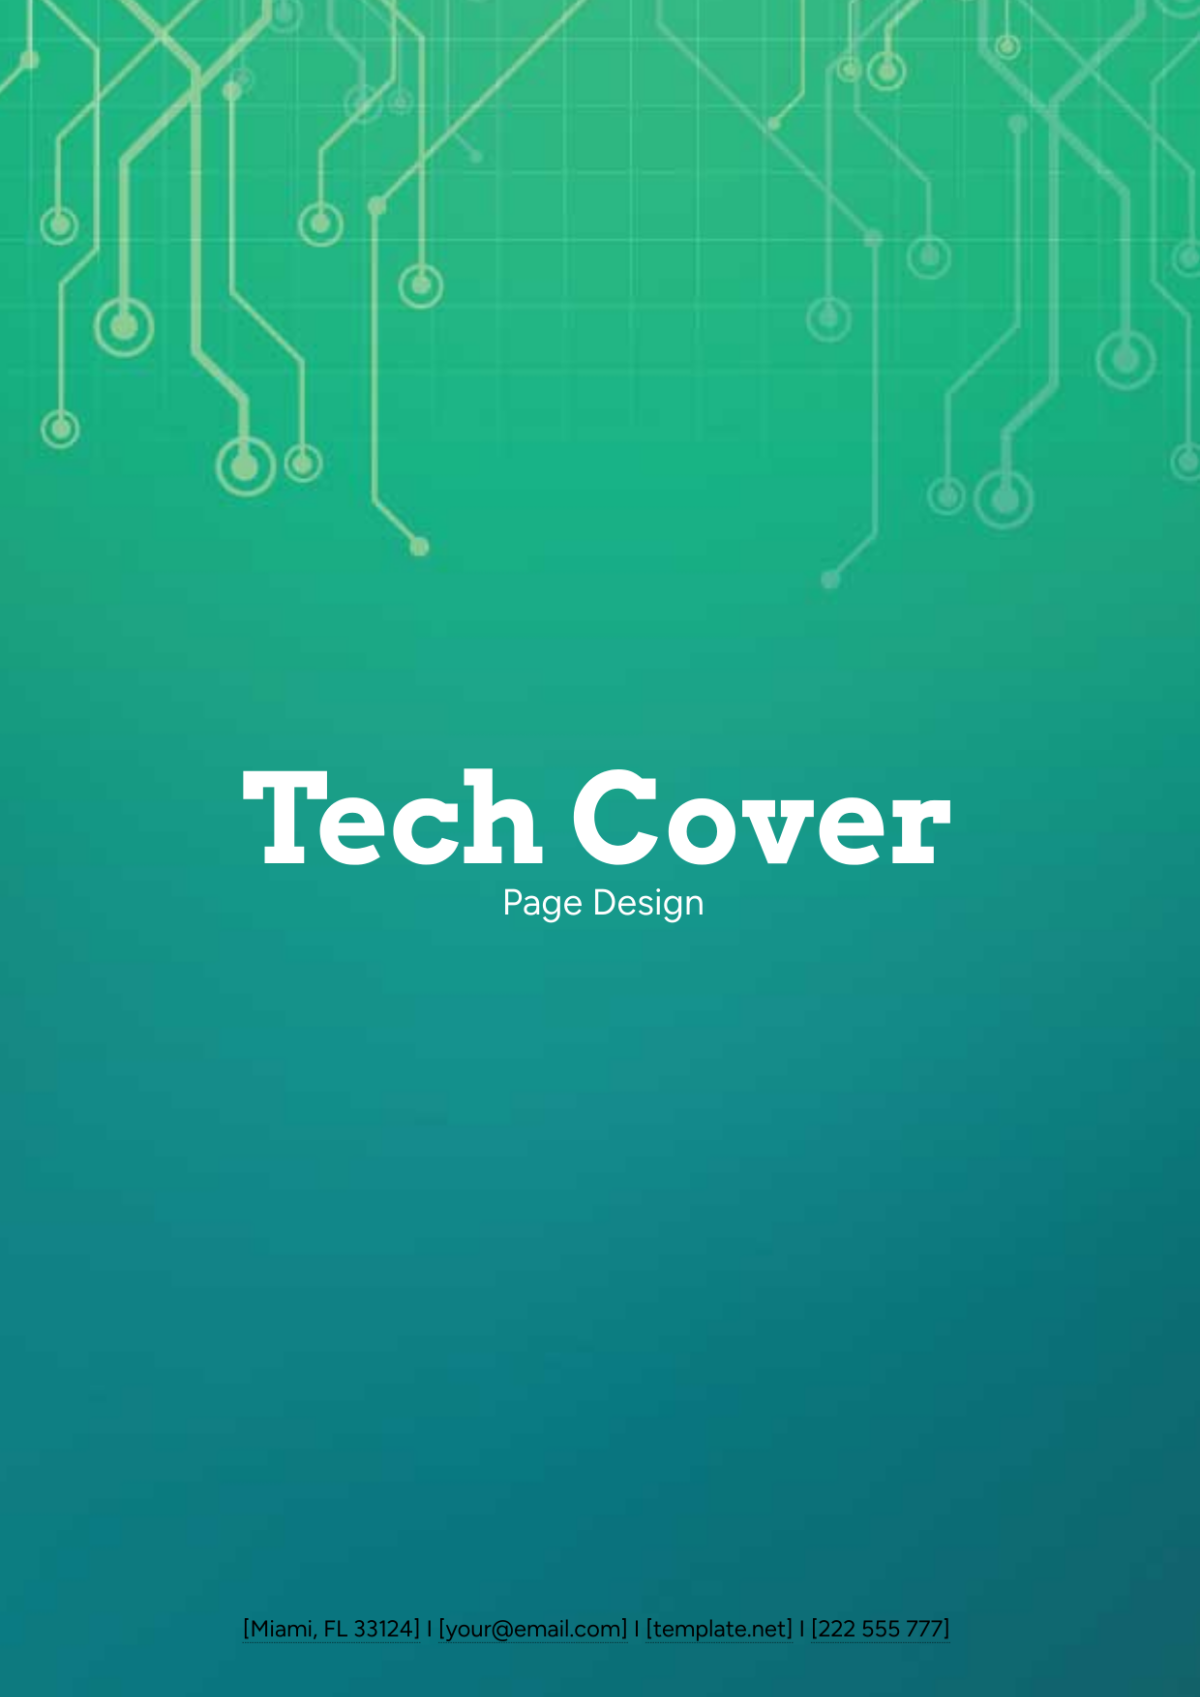 Tech Cover Page Design